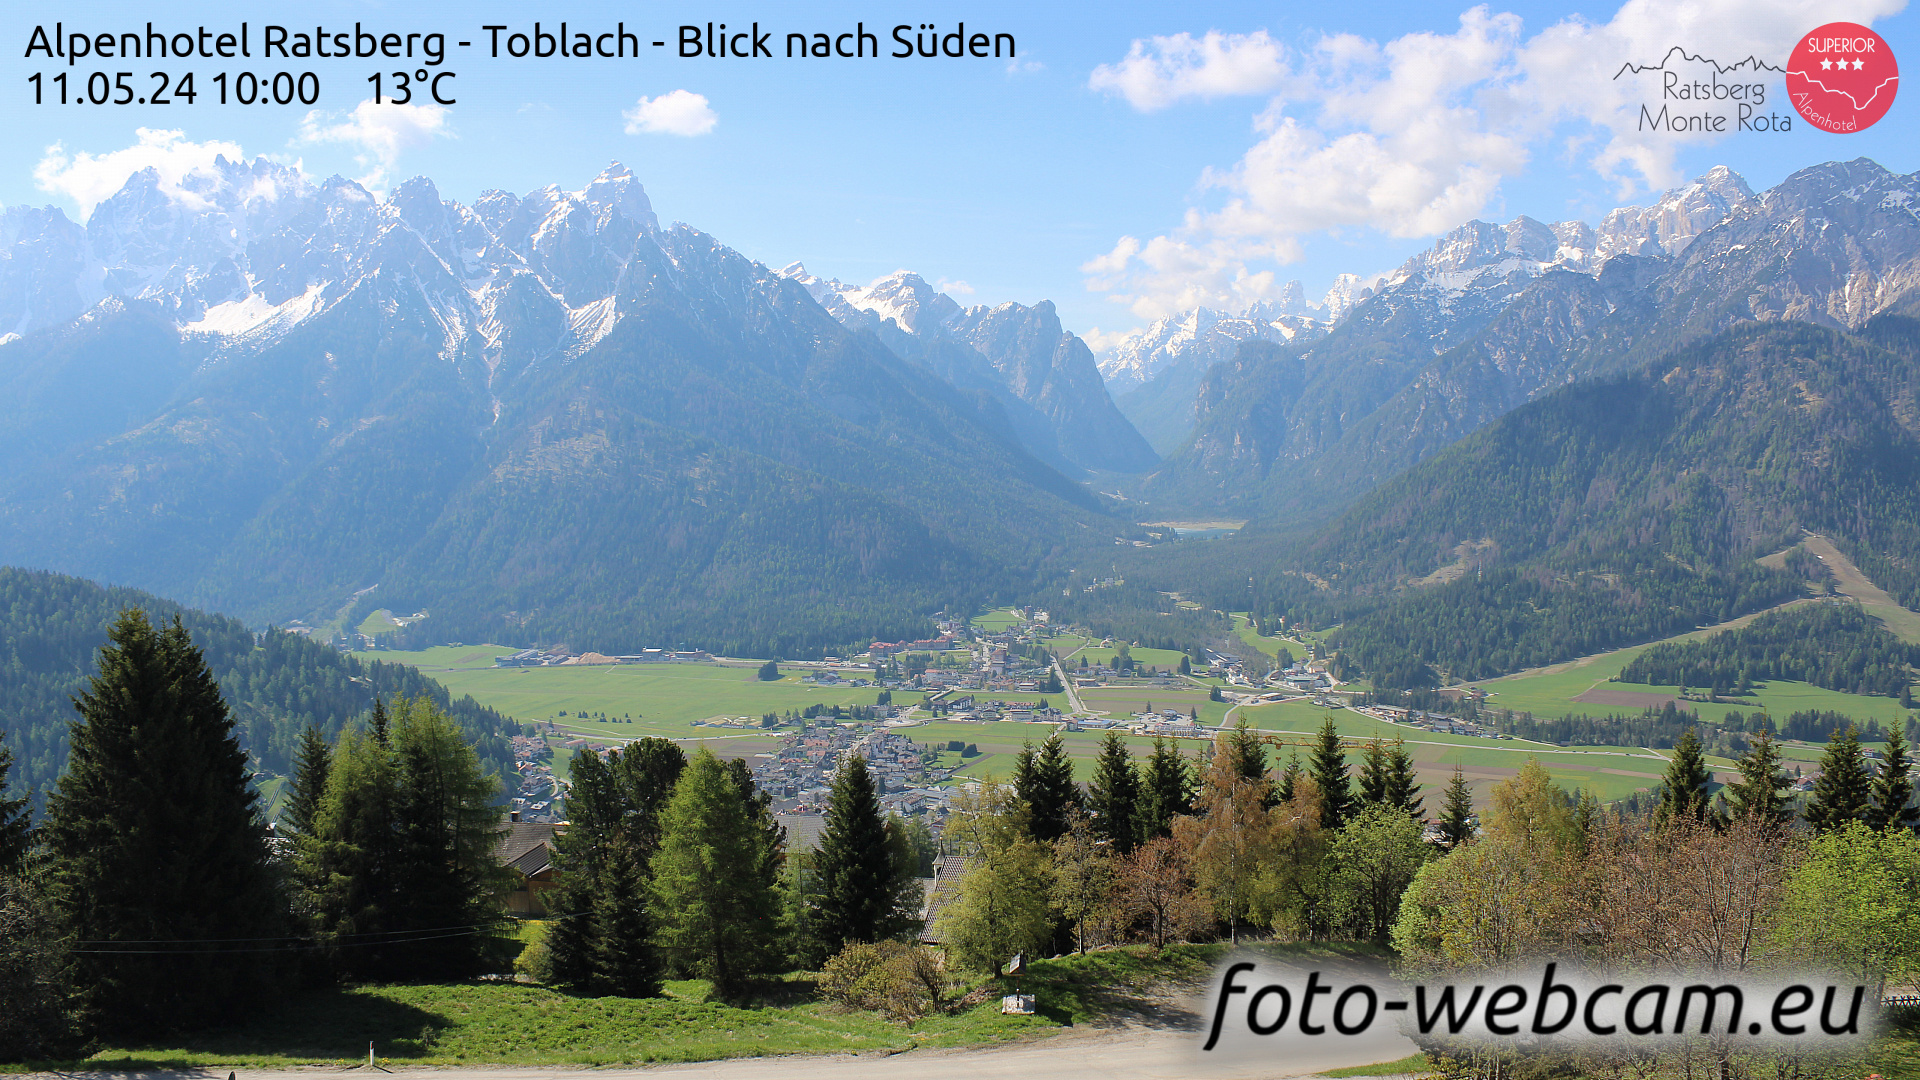 Toblach (Dolomites) Thu. 10:03